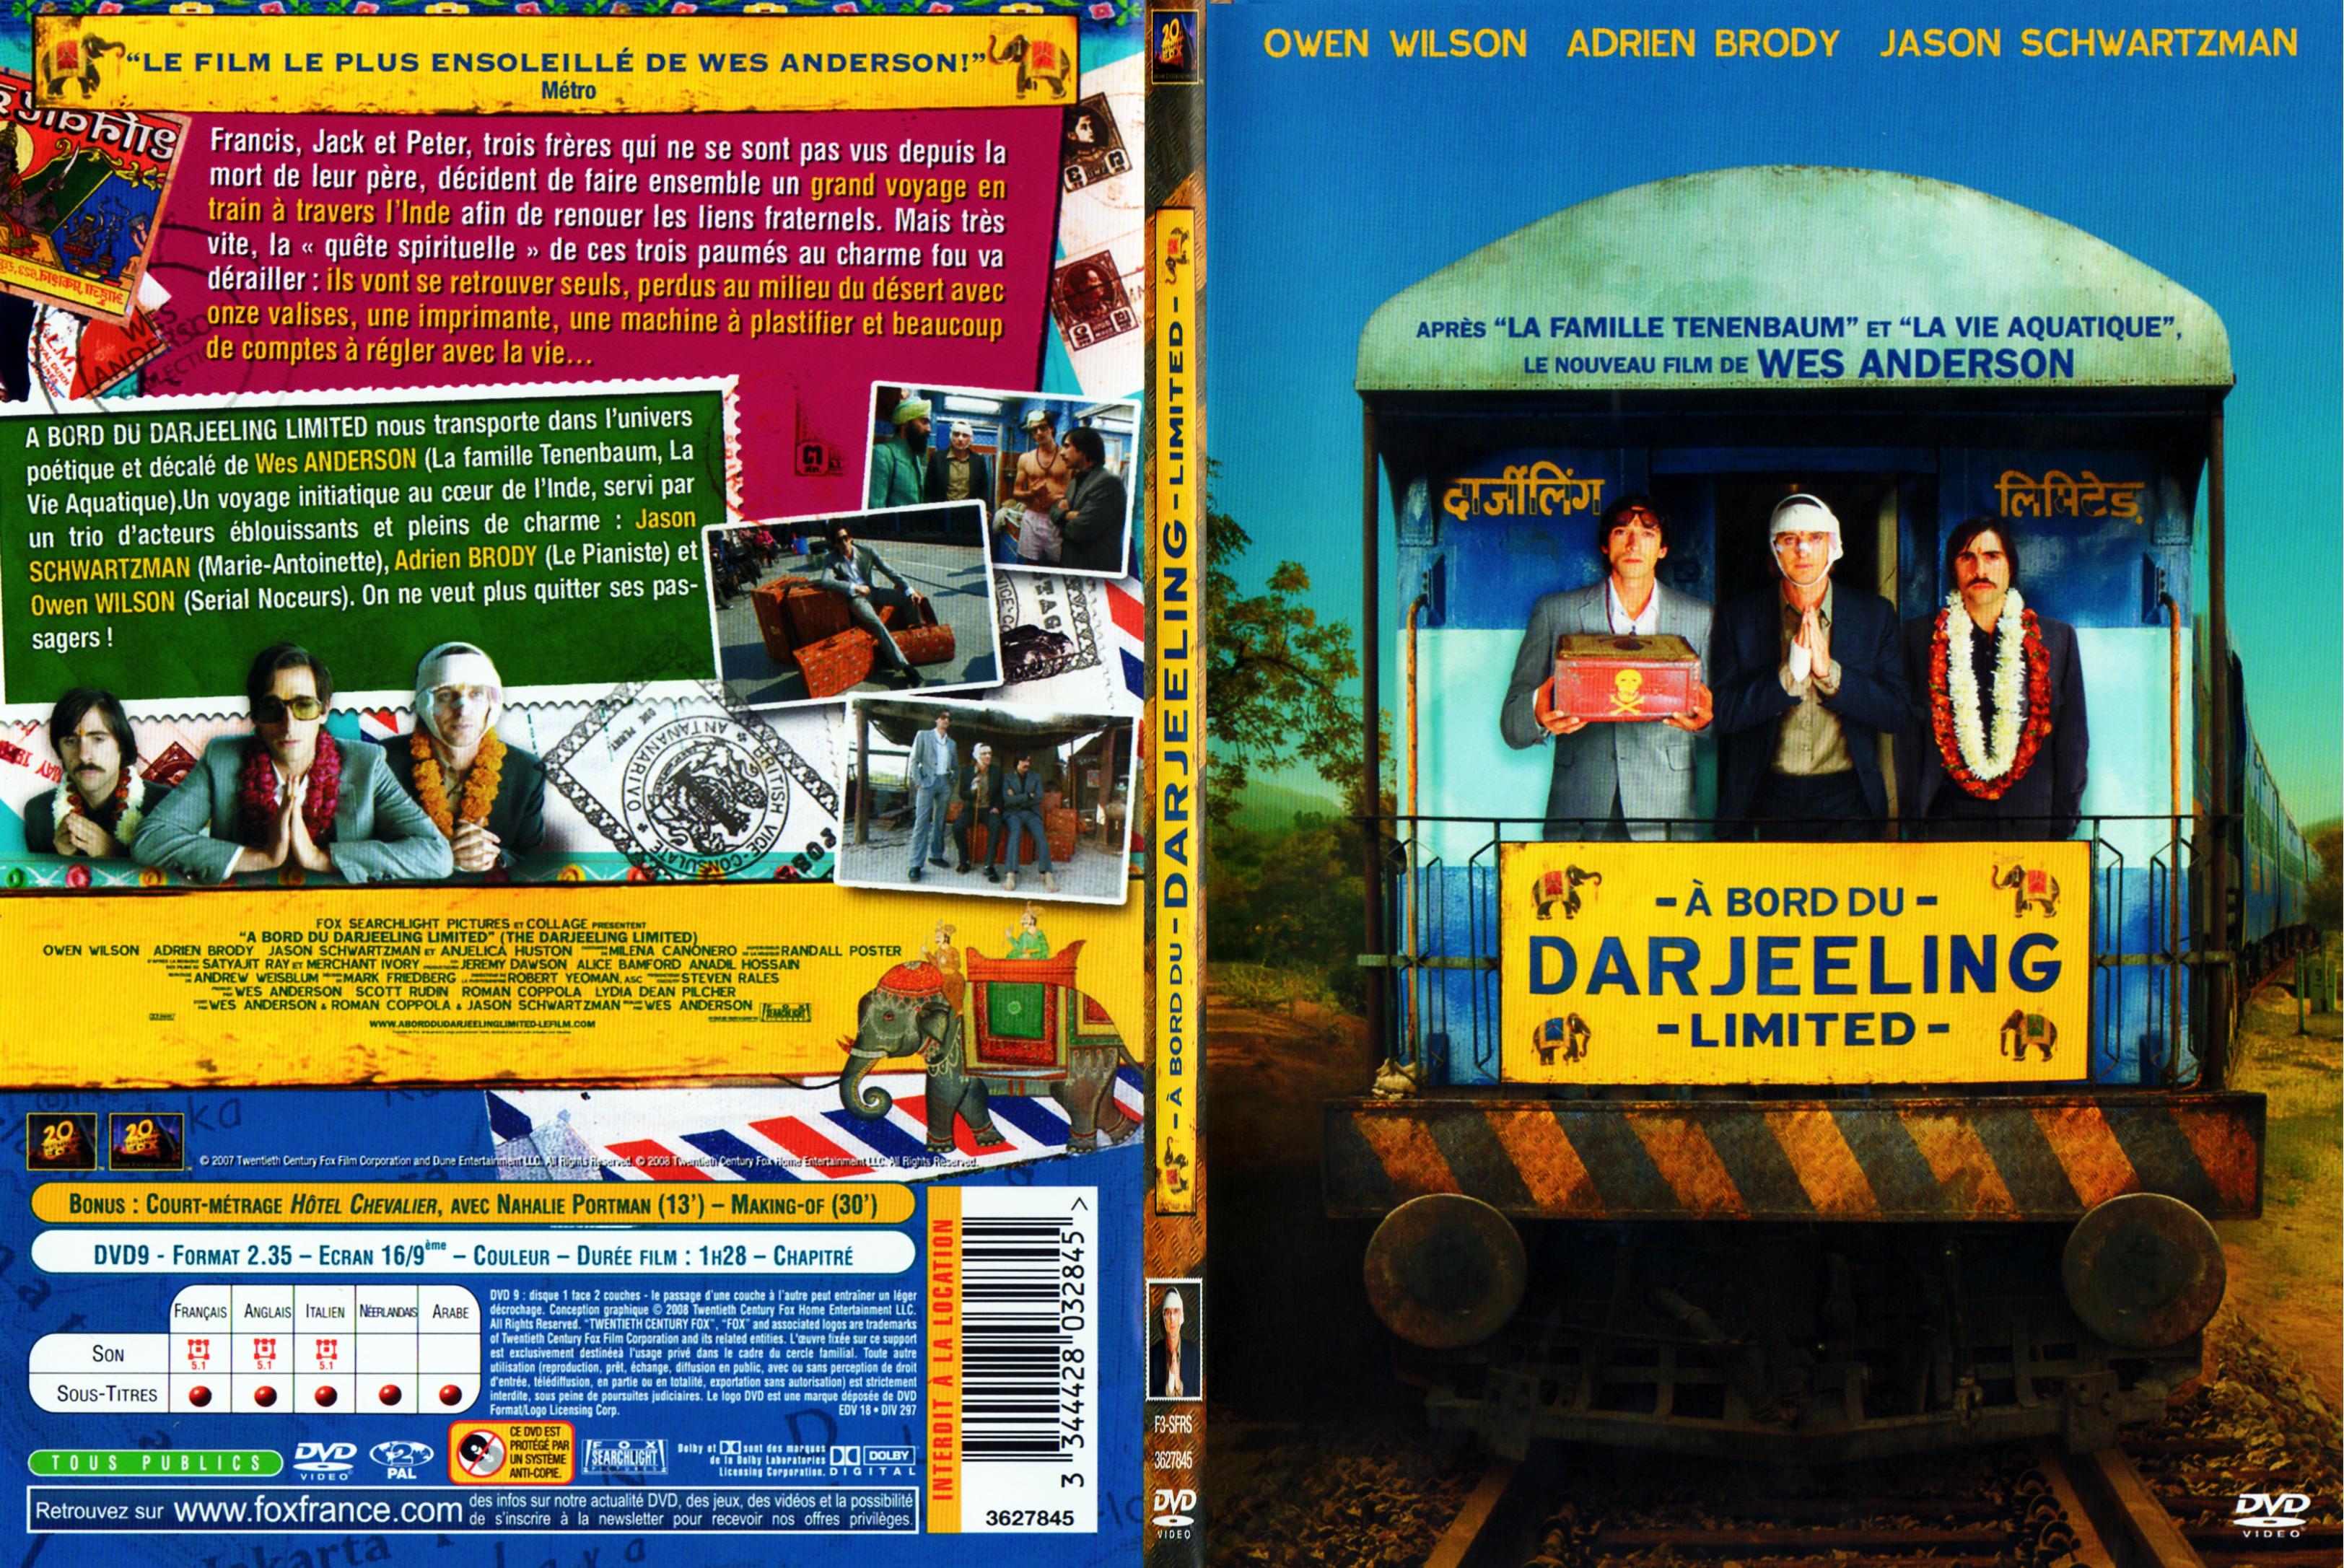 Jaquette DVD A bord du Darjeeling limited - SLIM